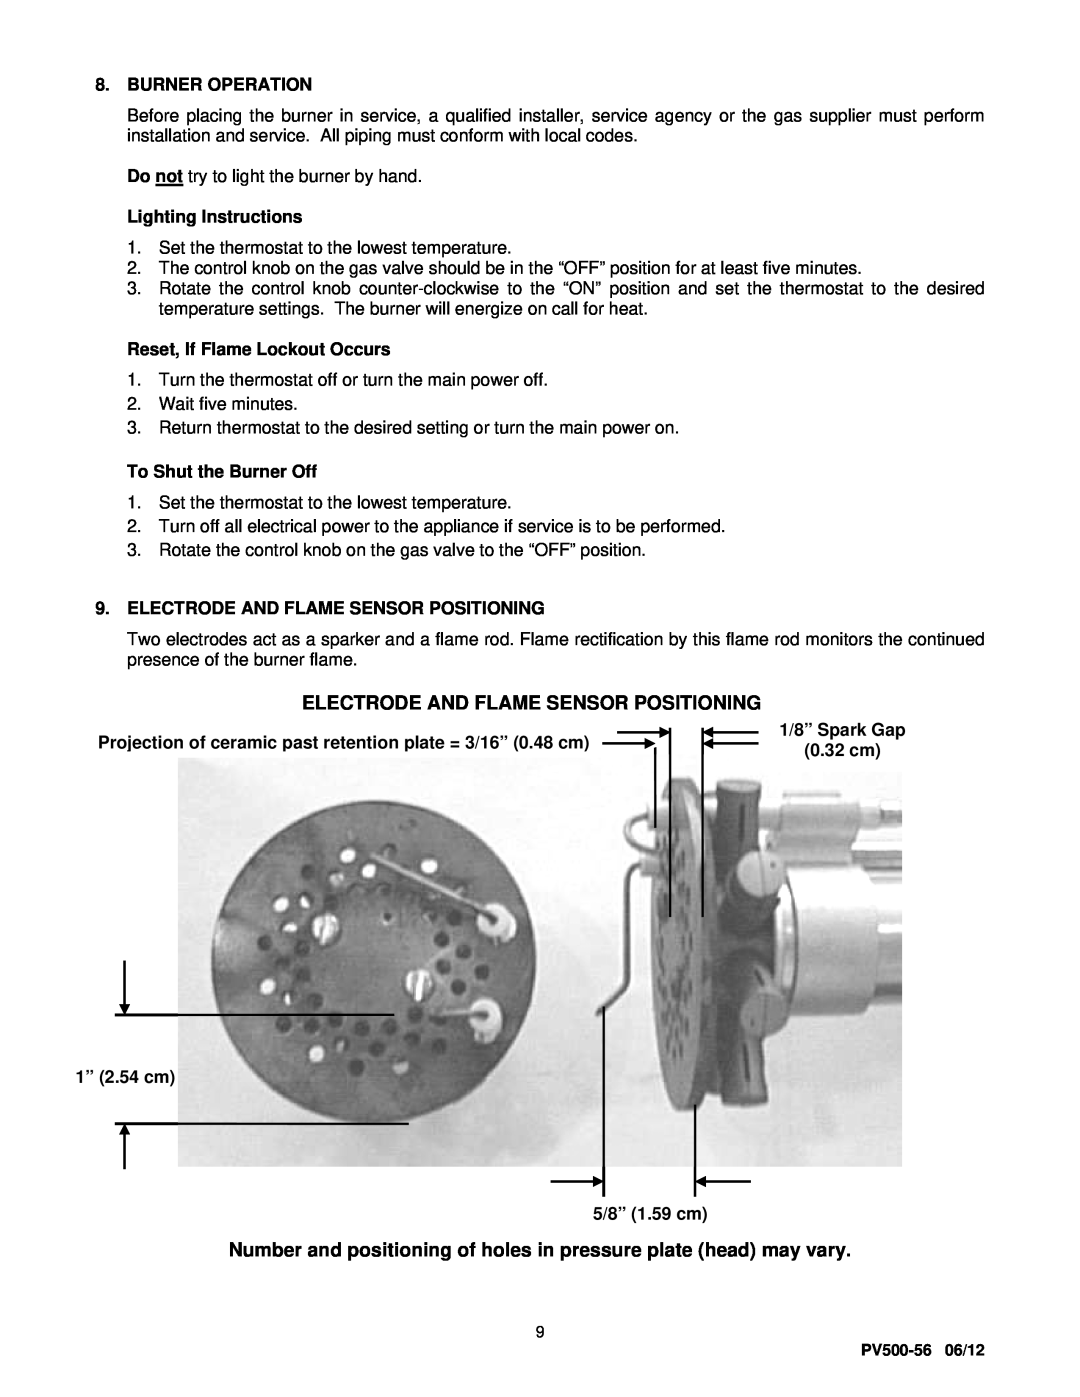 PVI Industries SU-3 manual Electrode And Flame Sensor Positioning, Burner Operation, Lighting Instructions 